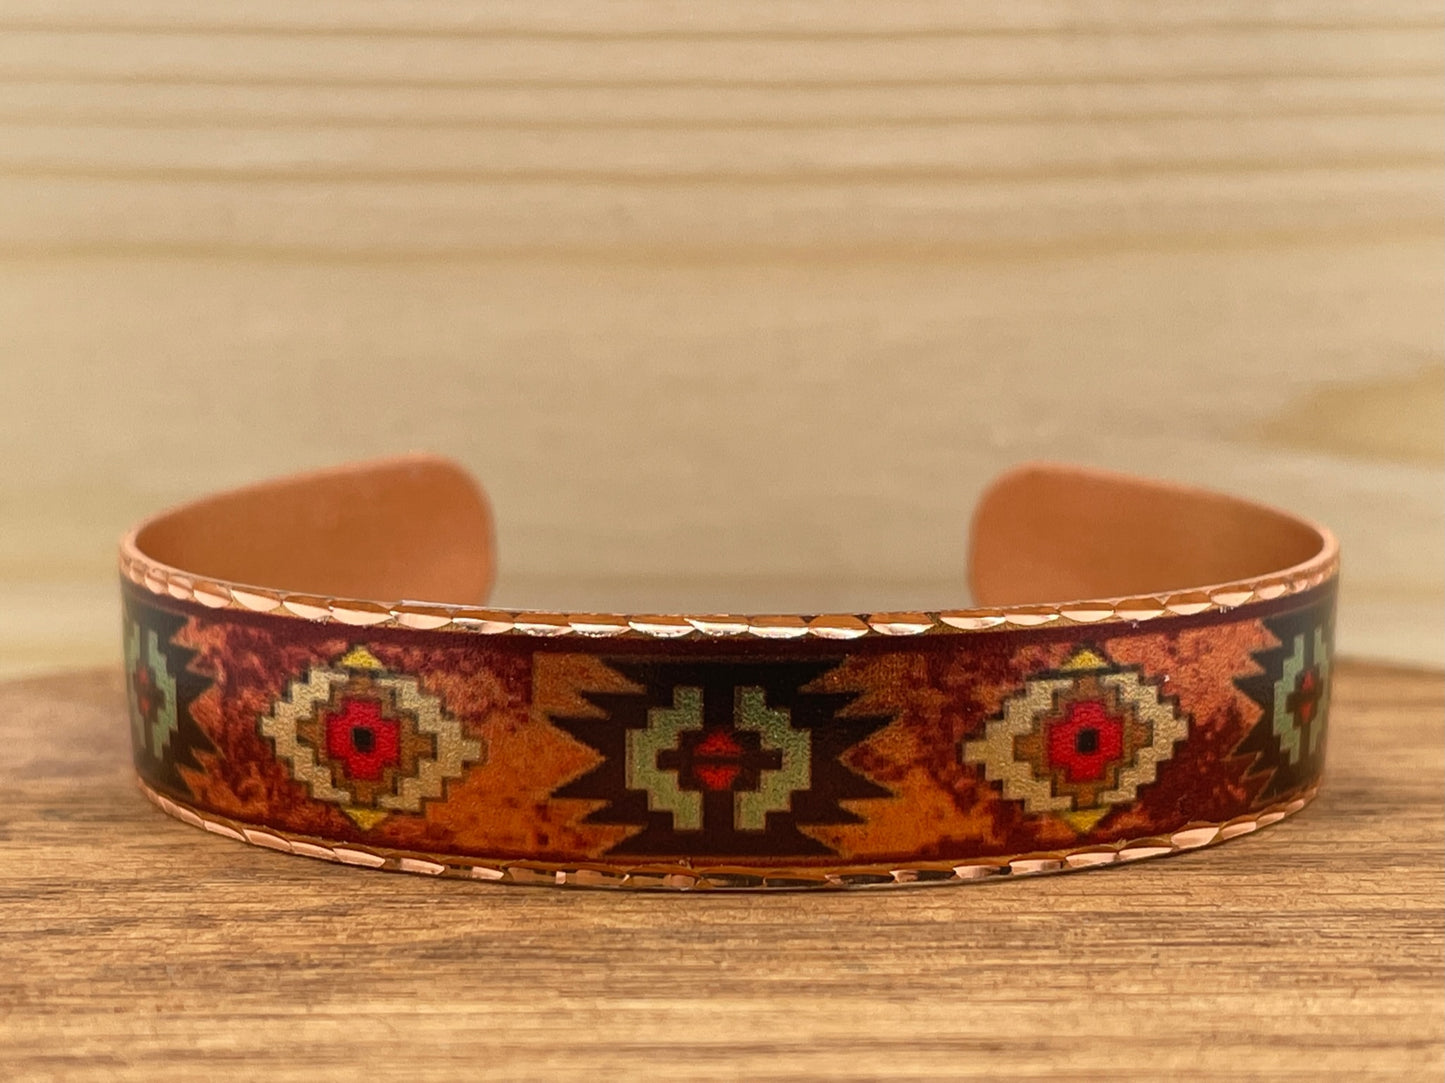 Sanka Painted Copper Bracelet